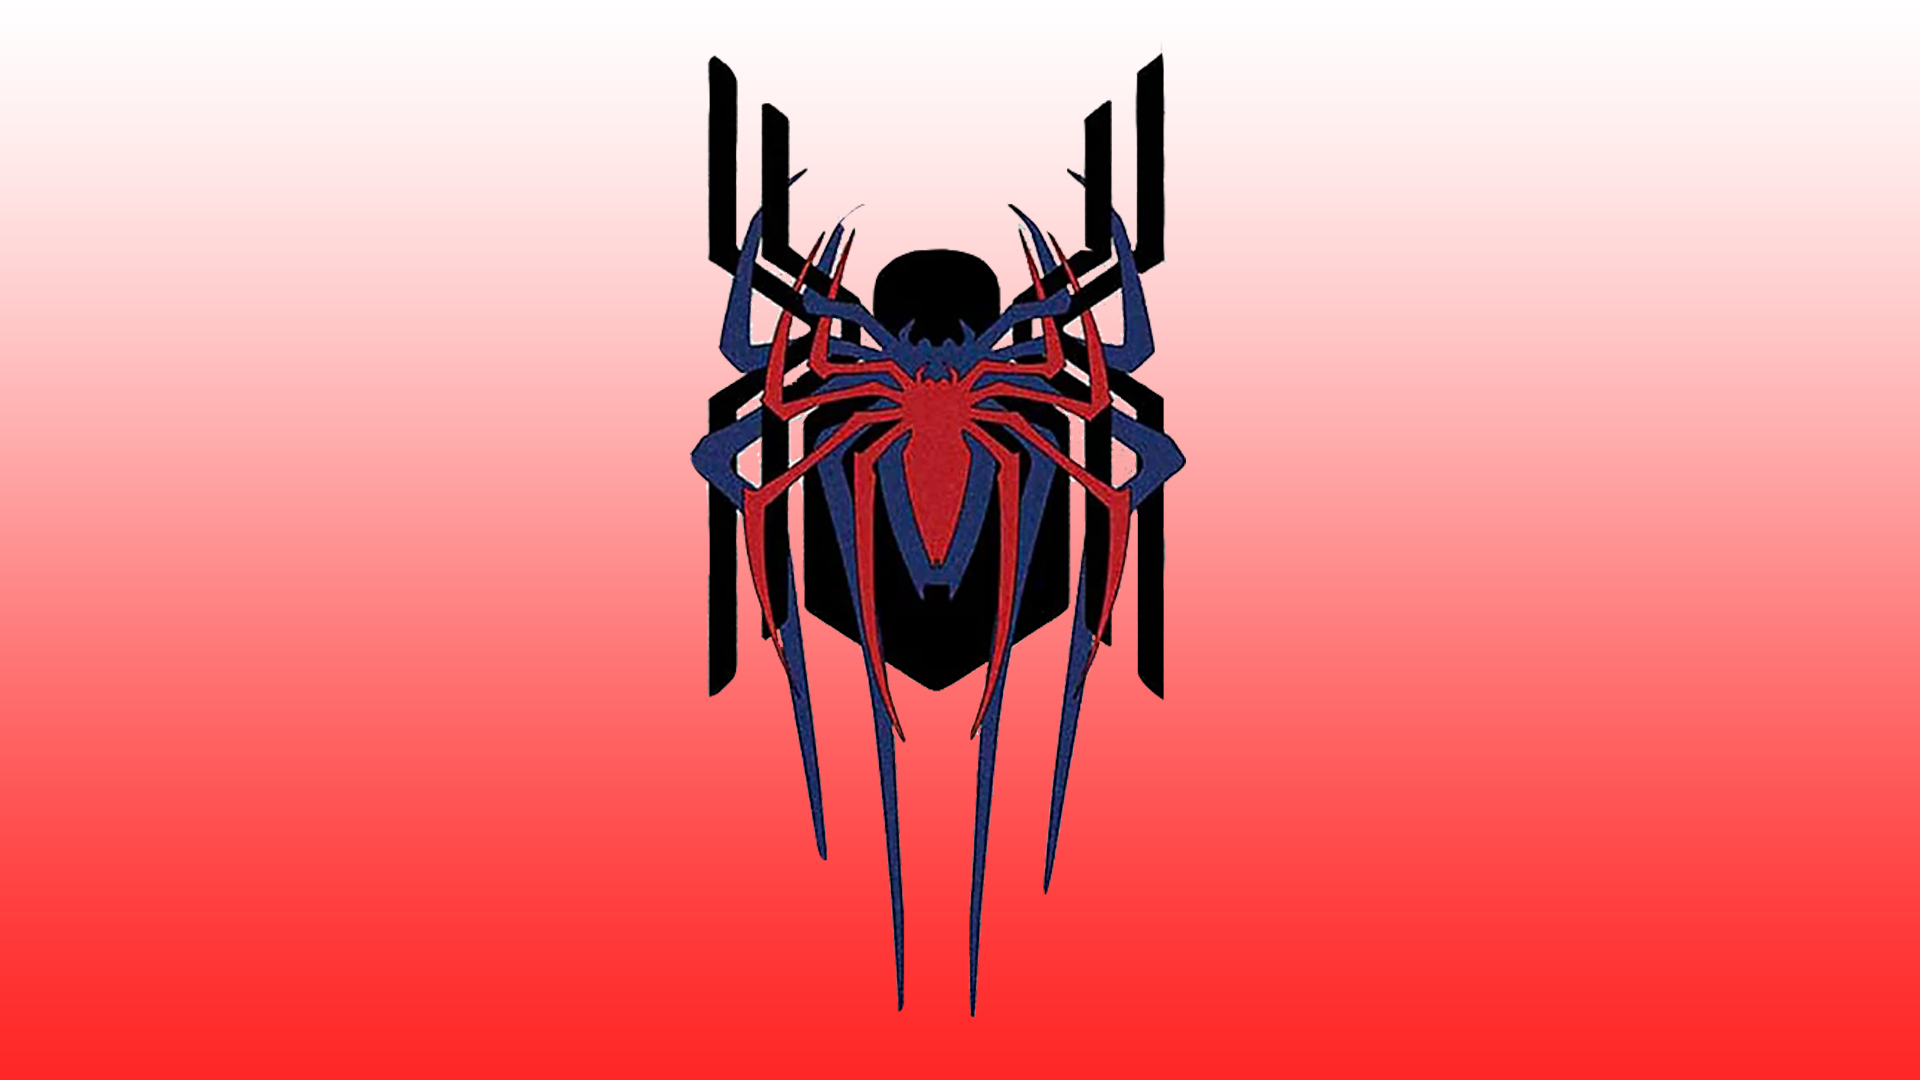 spiderman 4 symbol